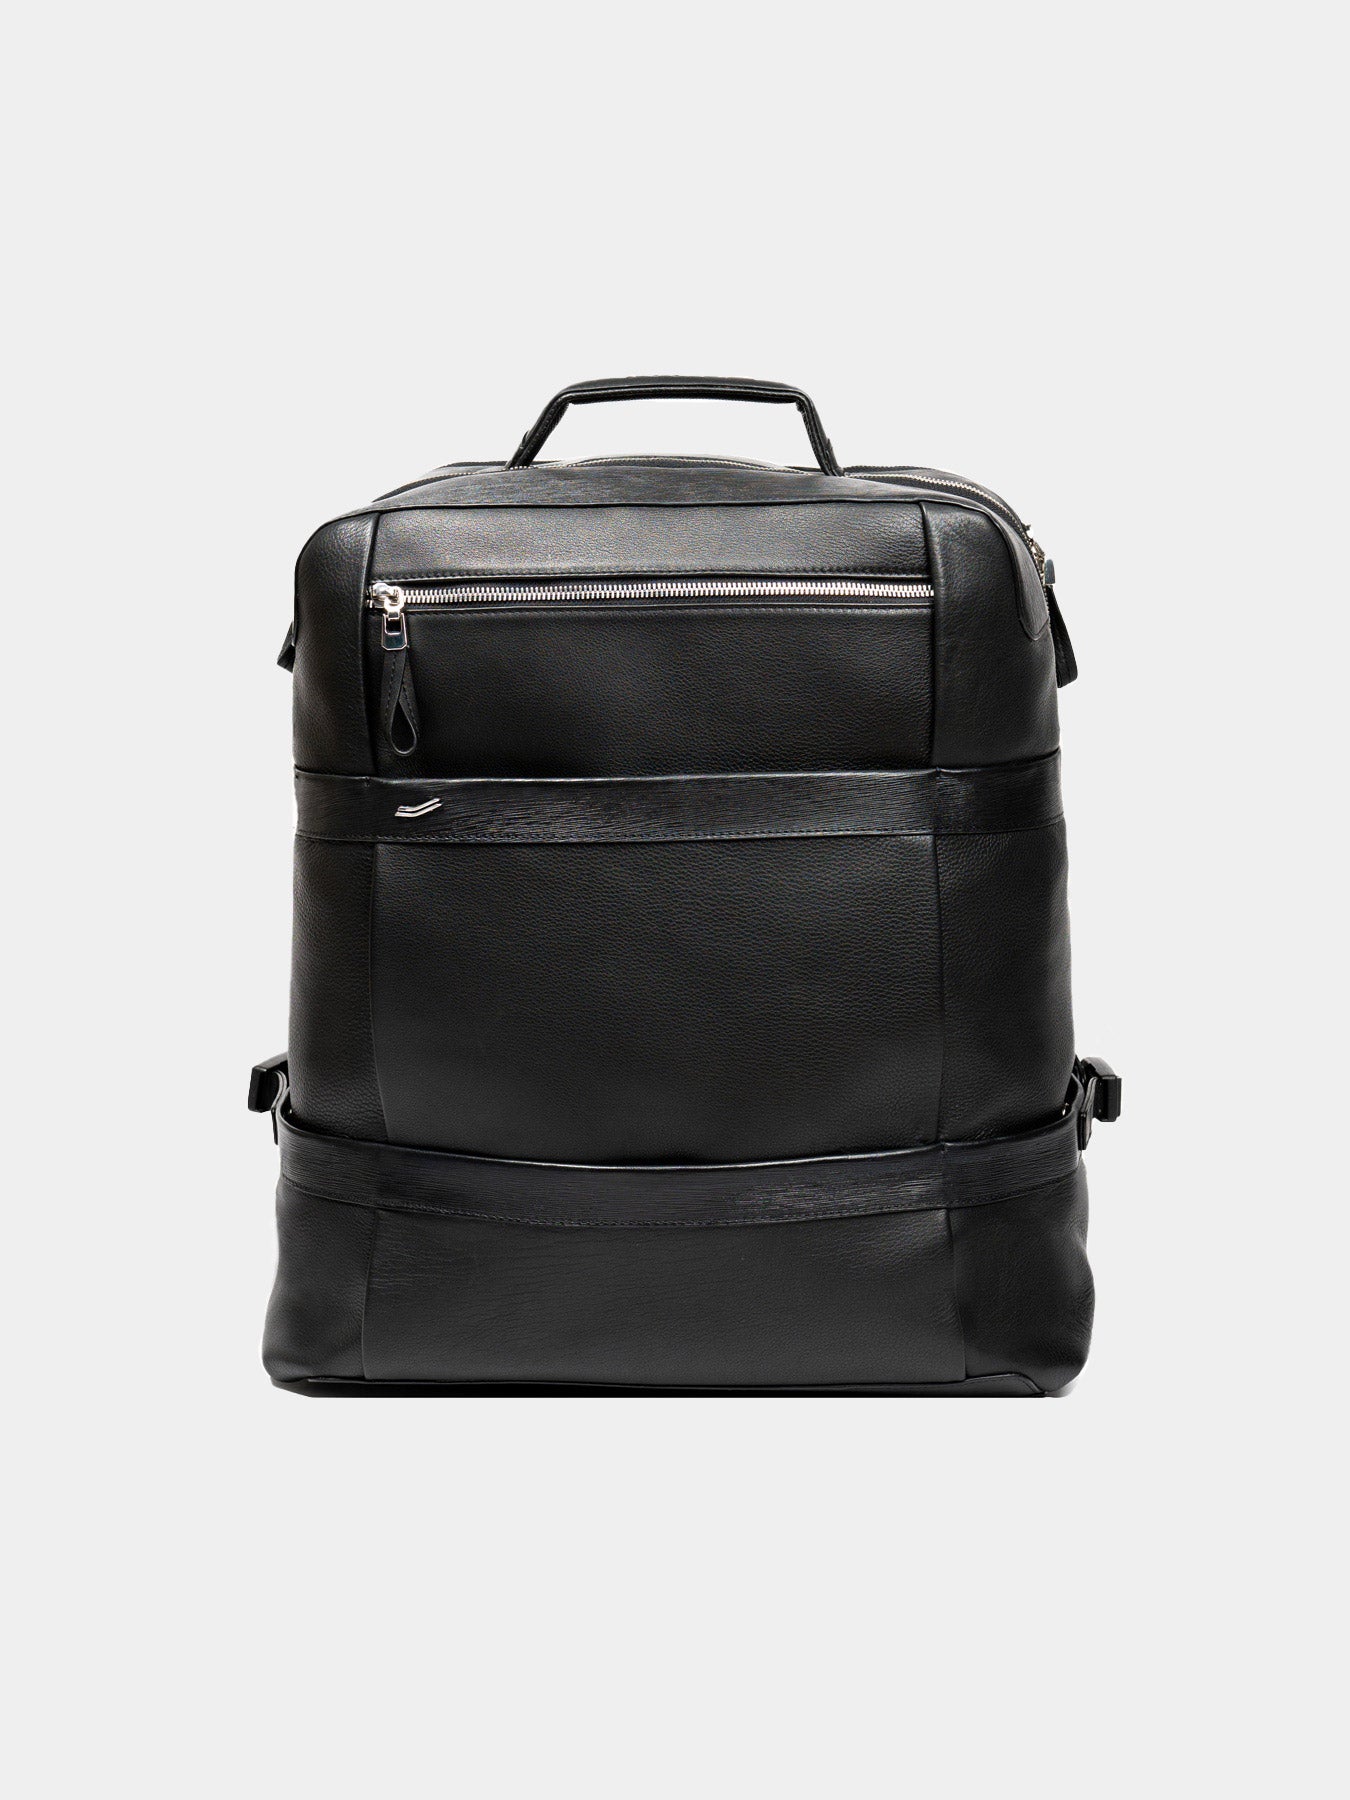 Backpack Large Vantage Collection | VOCIER Luggage & Accessories